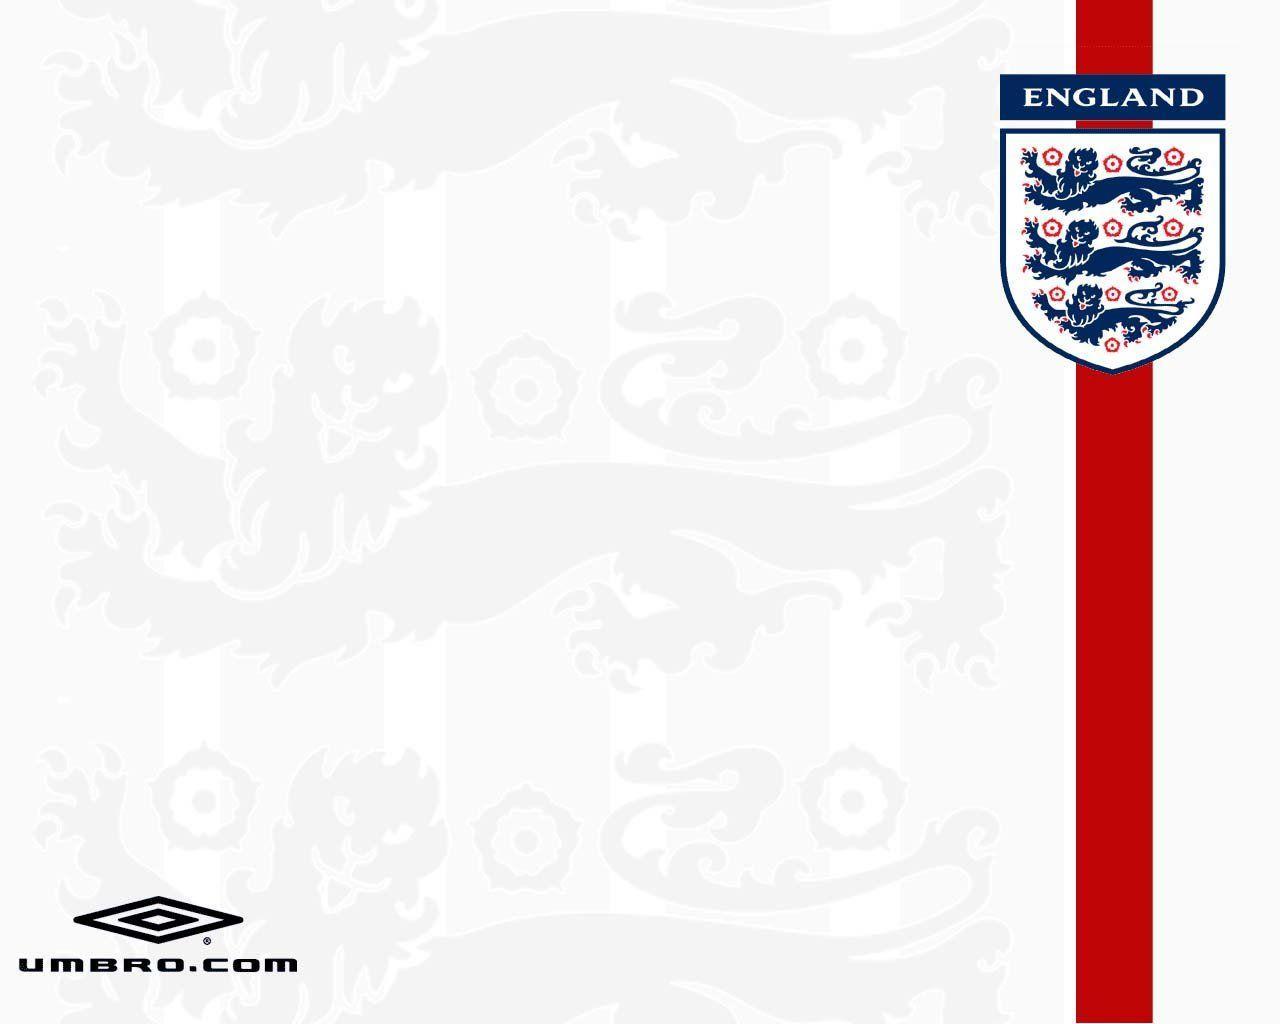 England Flag Wallpaper, British Flag, Union Jack Flag Wallpaper